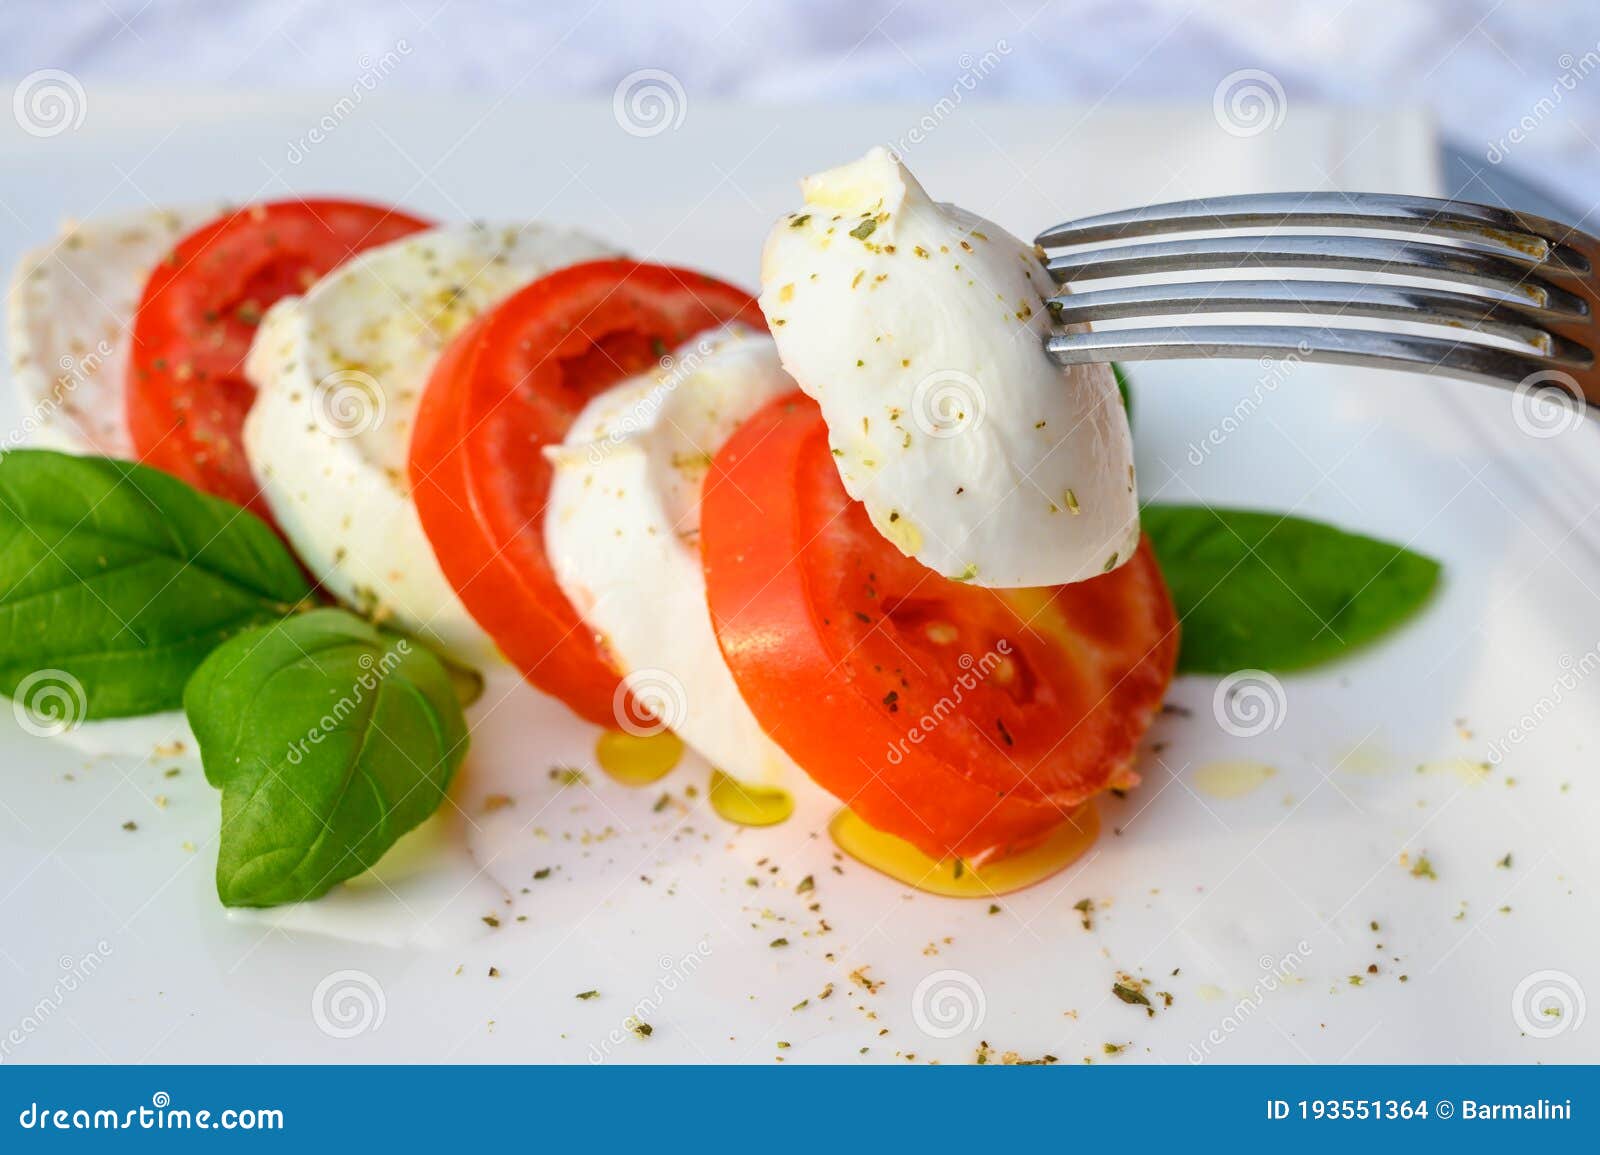 caprese salad made with fresh soft white italian cheese mozzarella buffalo, green basil, red tomatoes and origano herb